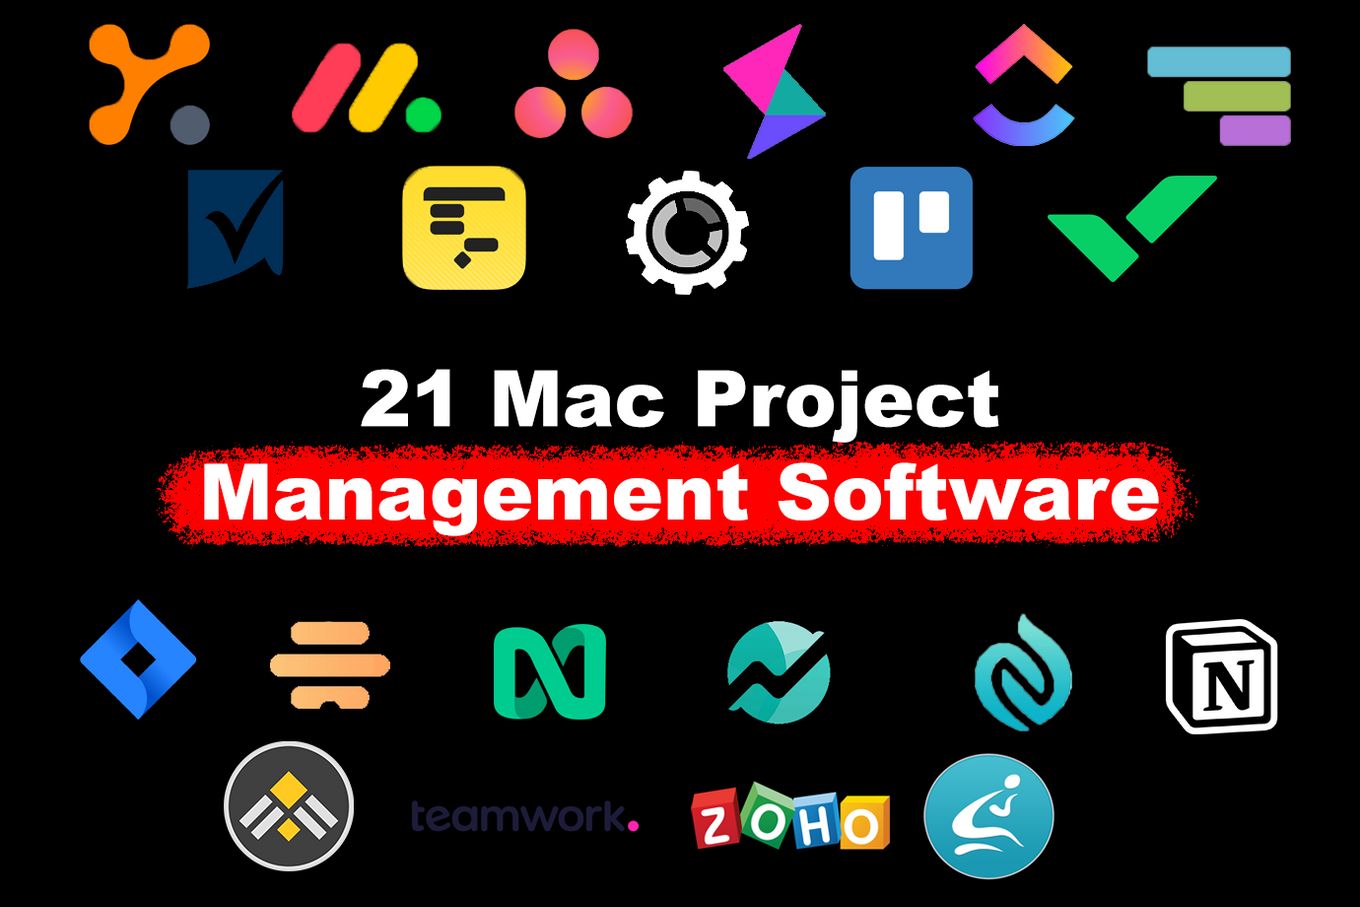 Mac Project Management Software